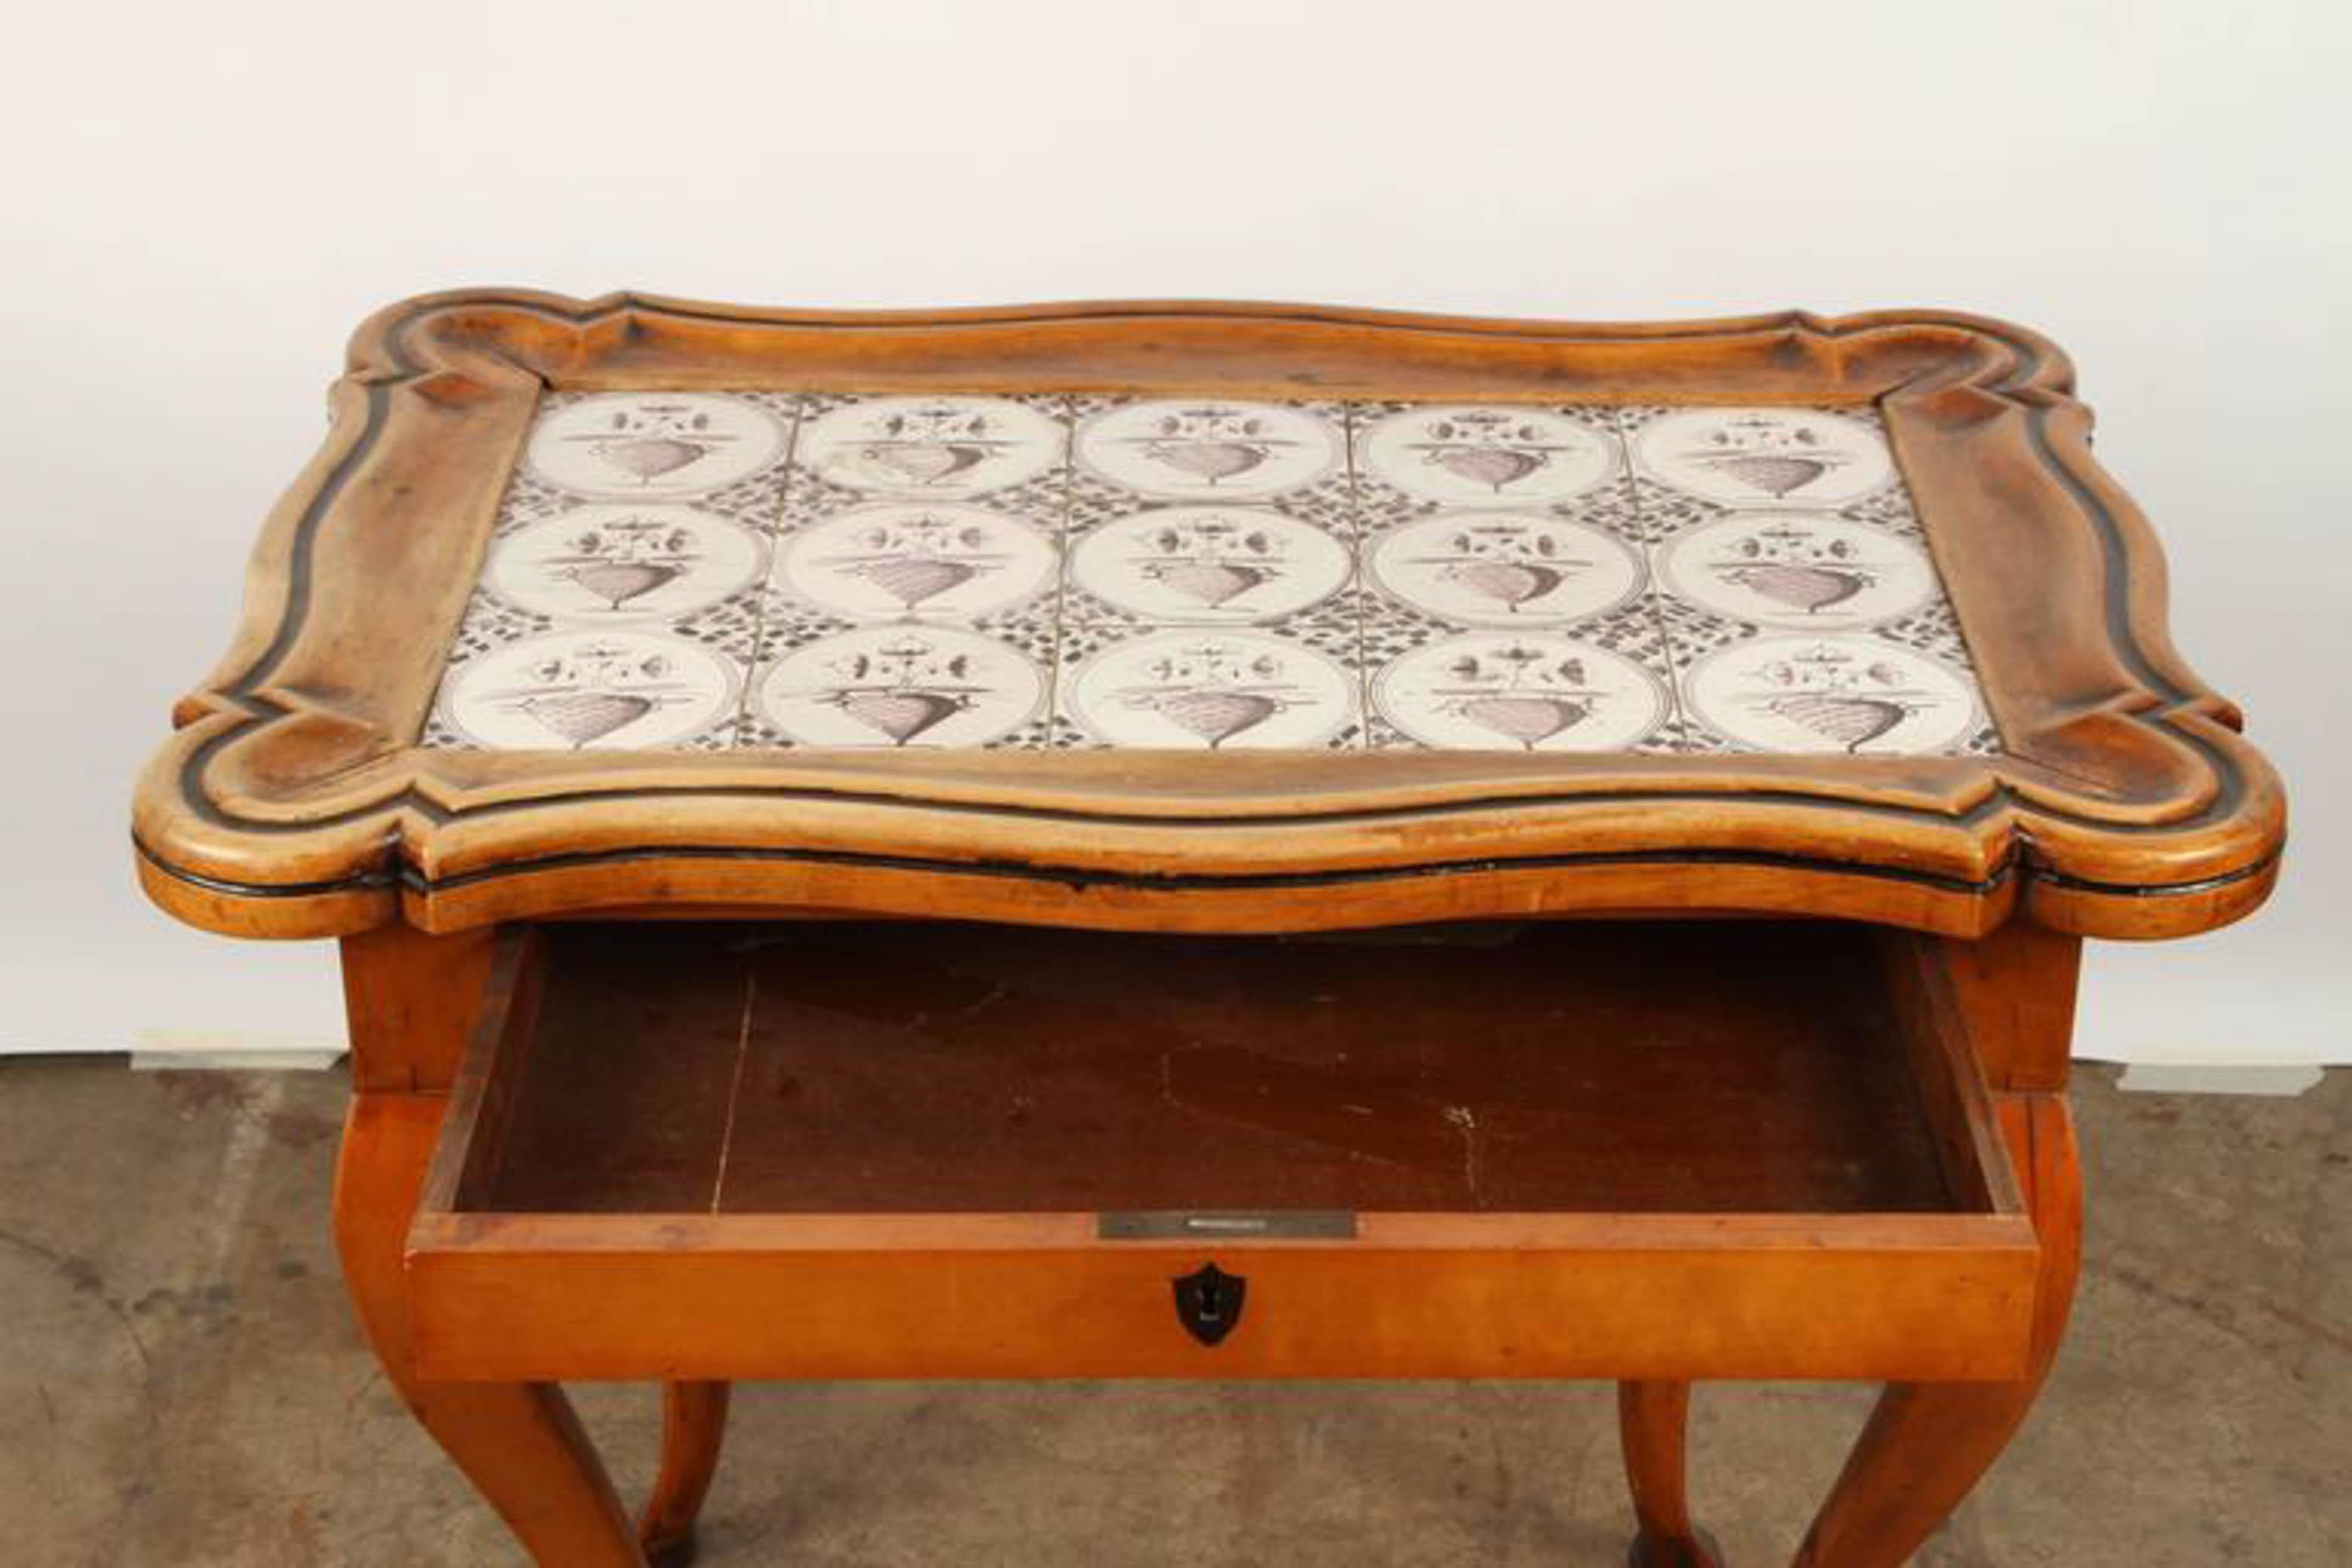 19th Century Northern German Rococo Style Table with Kellinghusen Tile 2